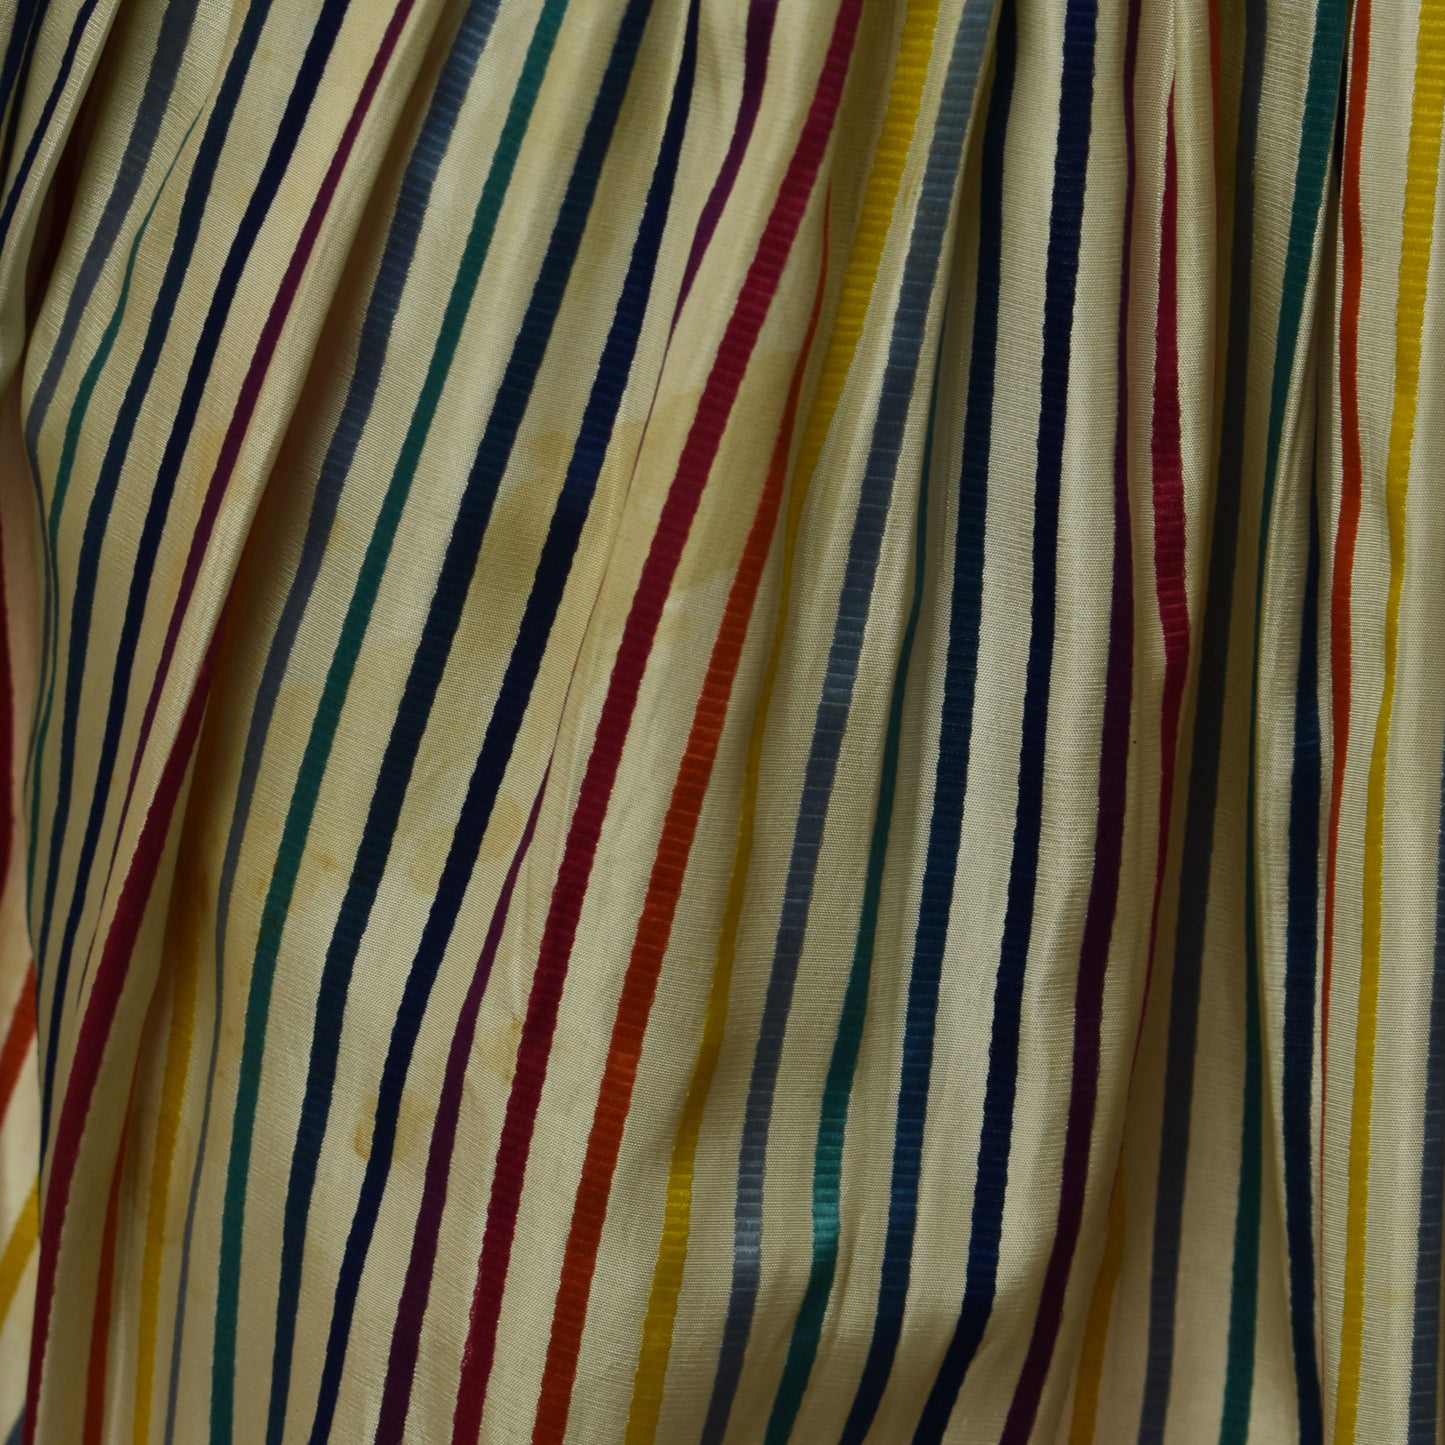 Vintage 1950s Rainbow Striped Taffeta Circle Skirt with Talon Zipper and Folded Waistband Pocket Bag